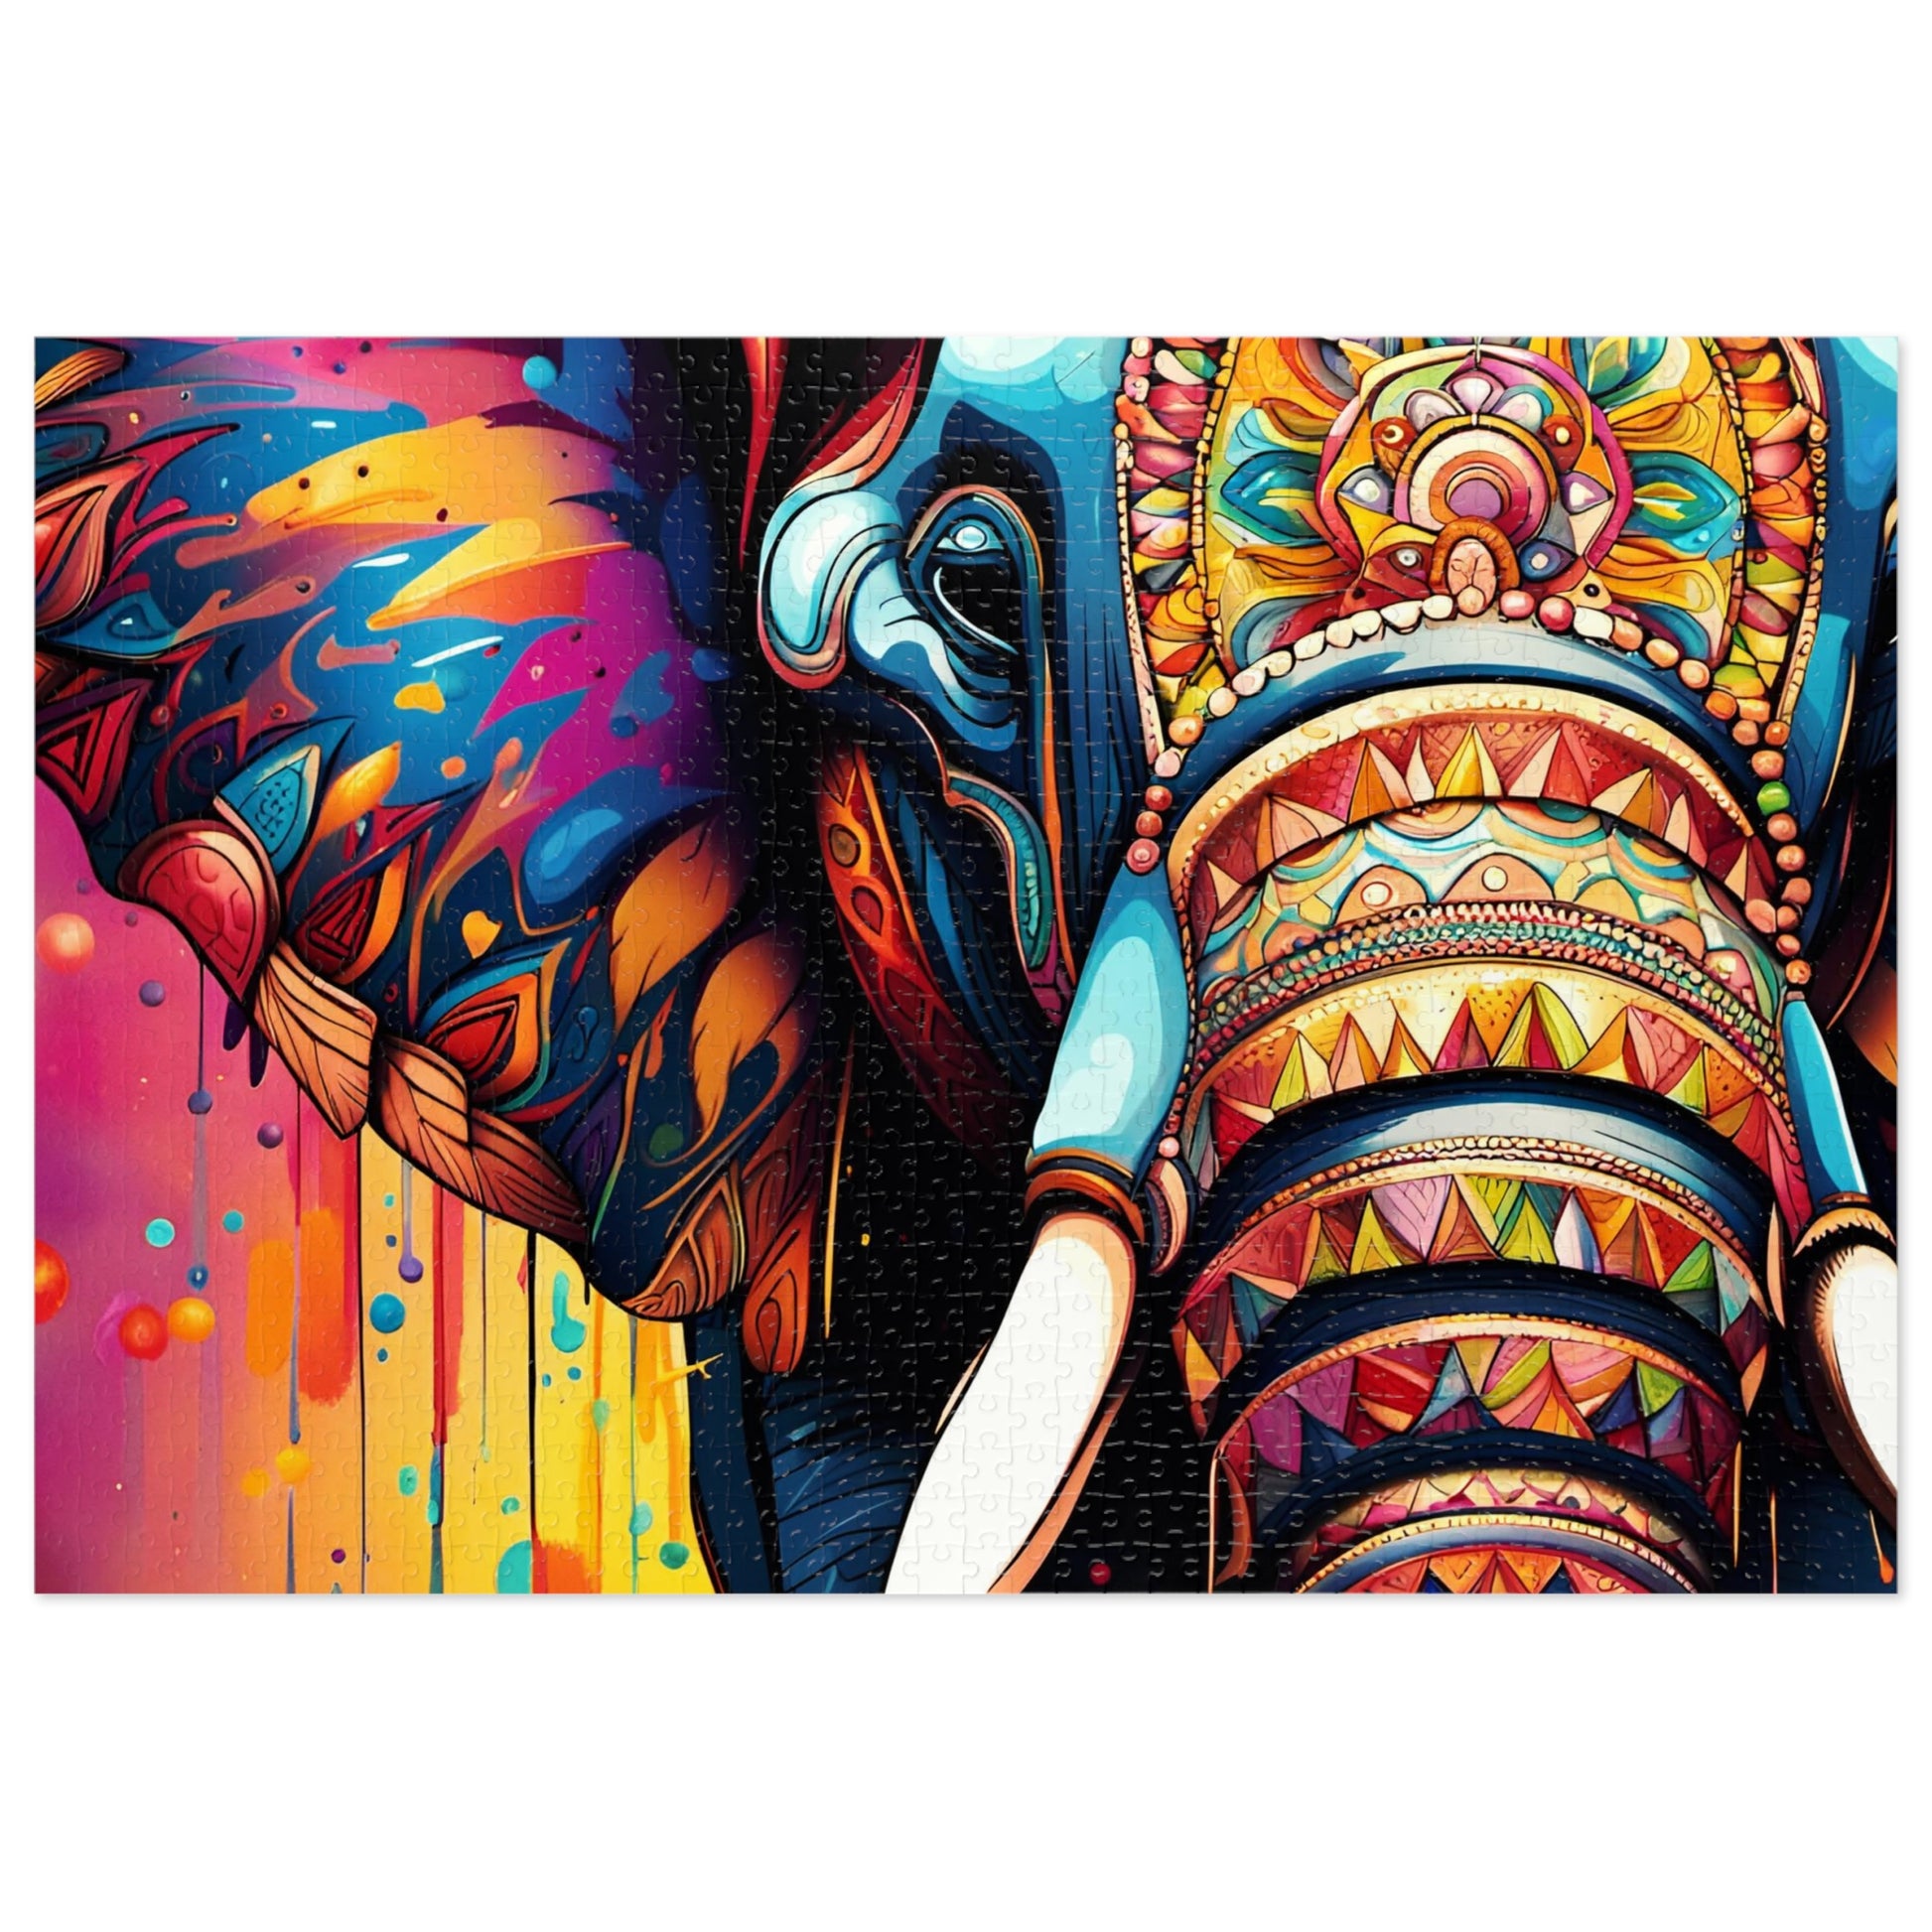 Elephant Themed Jigsaw Puzzle - Stunning Multicolor Mandala Elephant Head Print on 1000 Pieces Puzzle